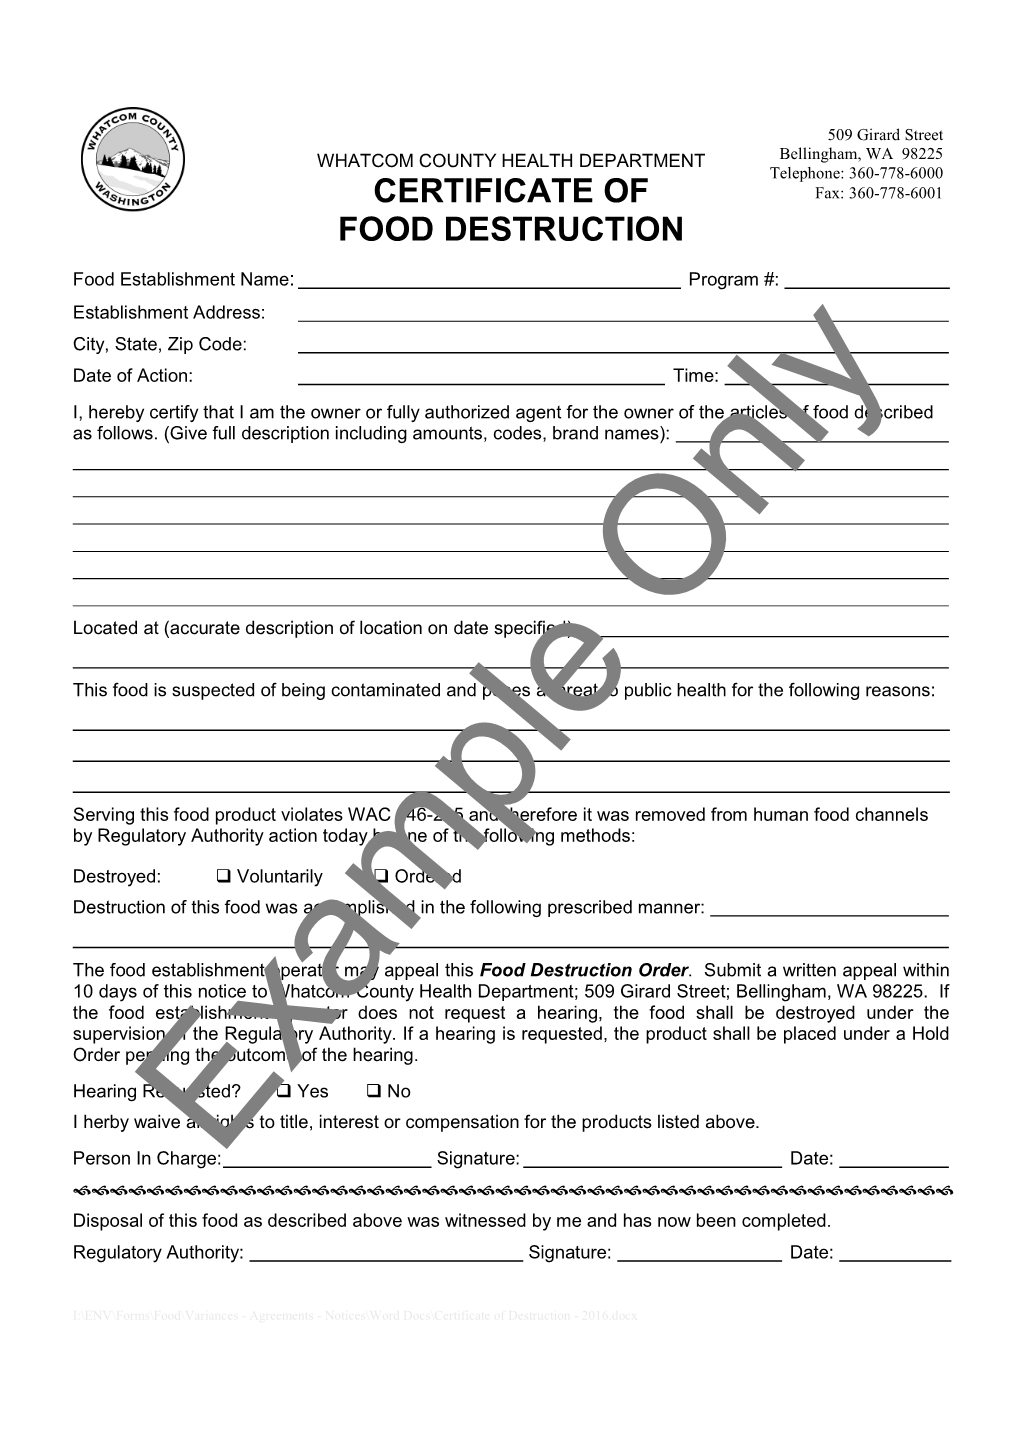 Certificate of Food Destruction